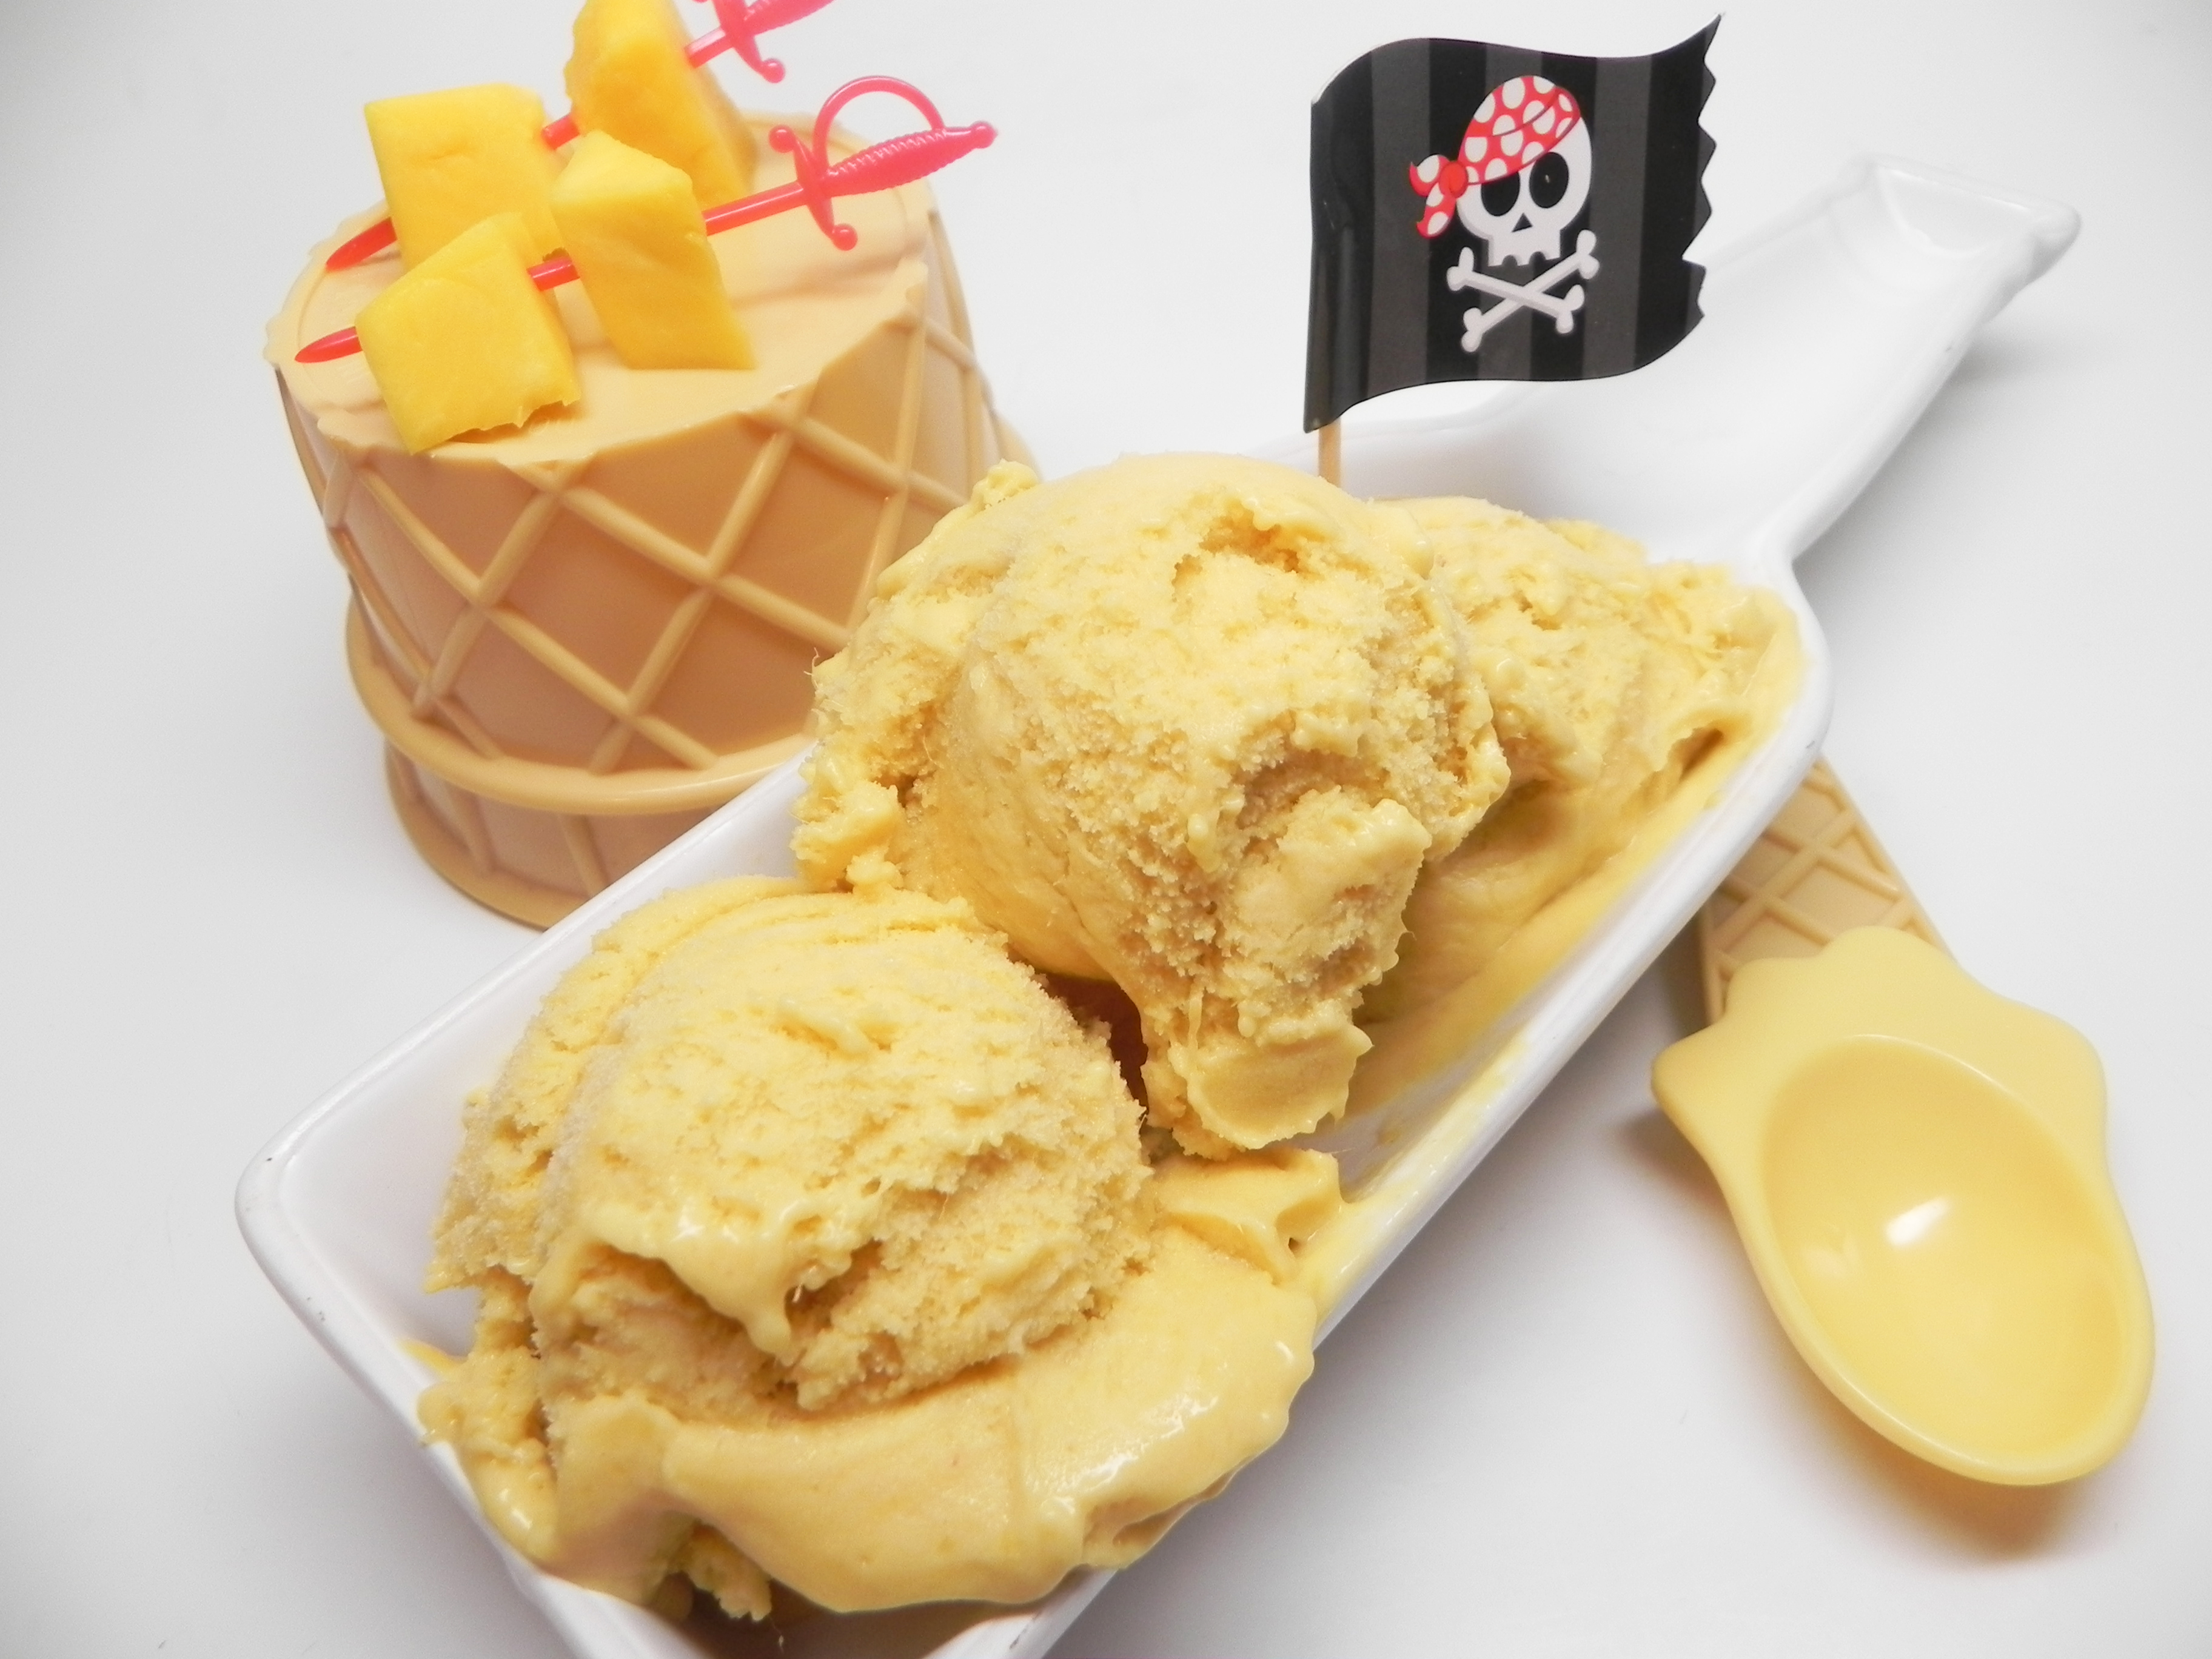 The Captain's Mango Ice Cream